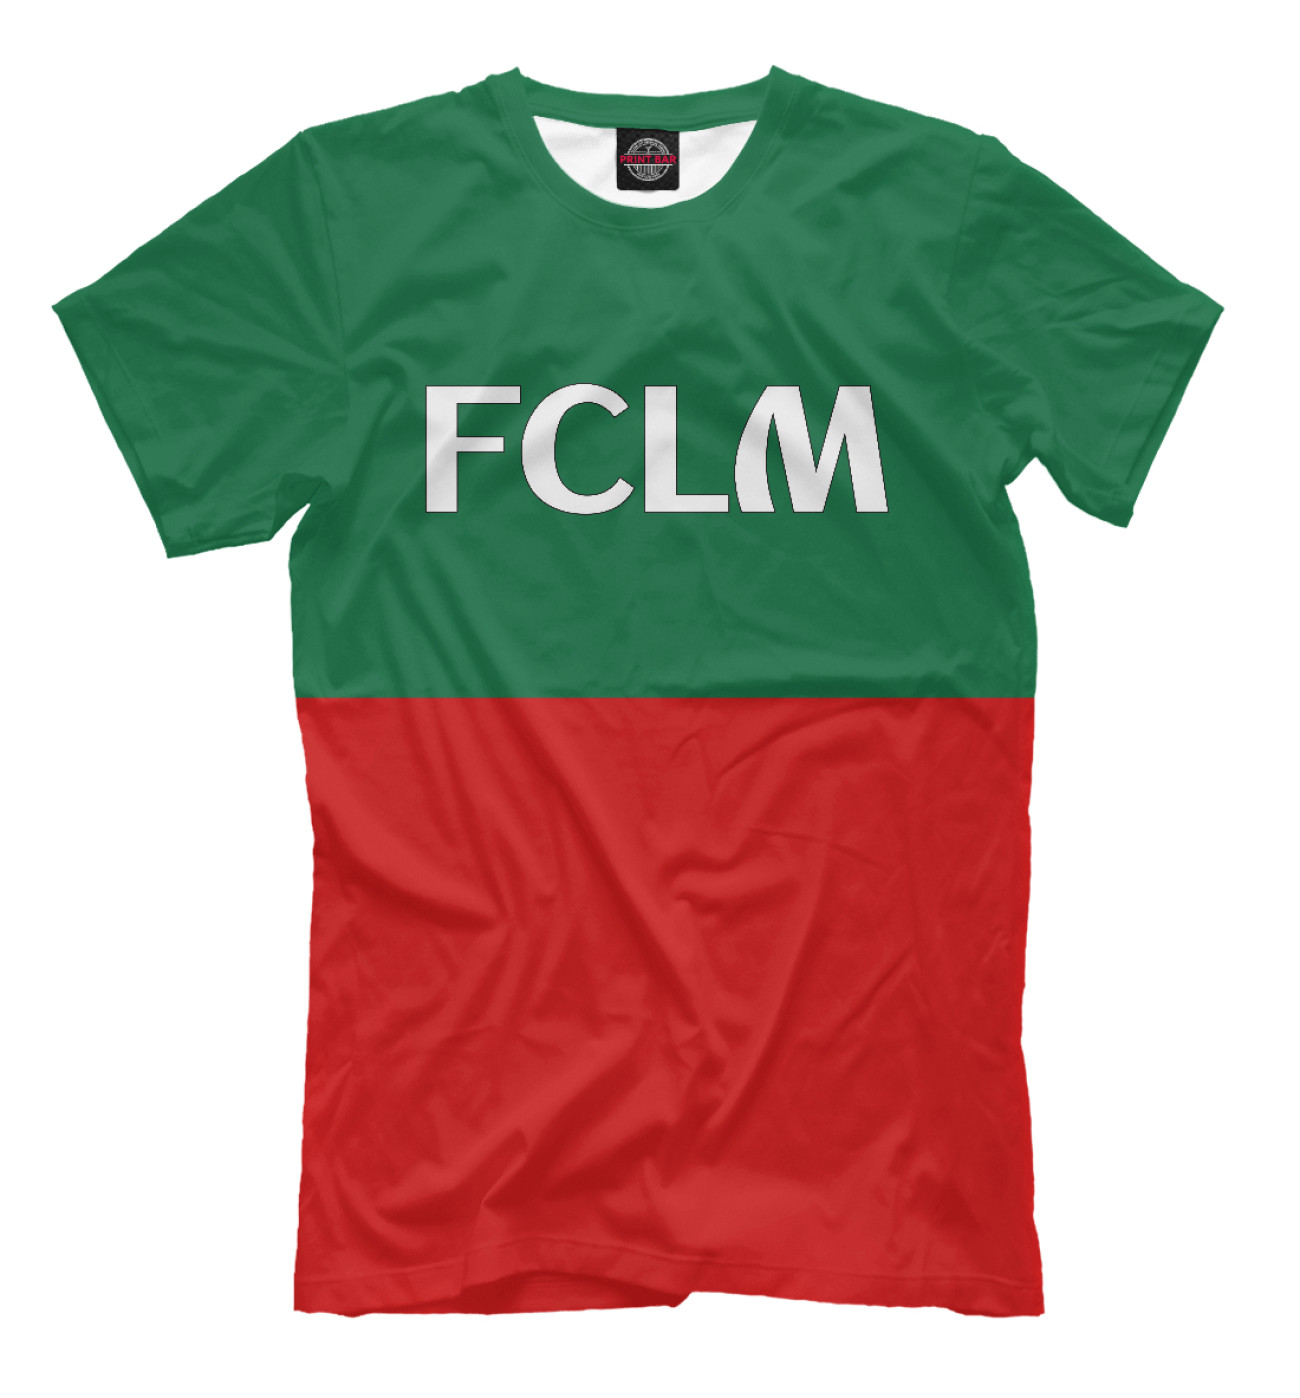 Мужская Футболка FCLM, артикул: FTO-591610-fut-2